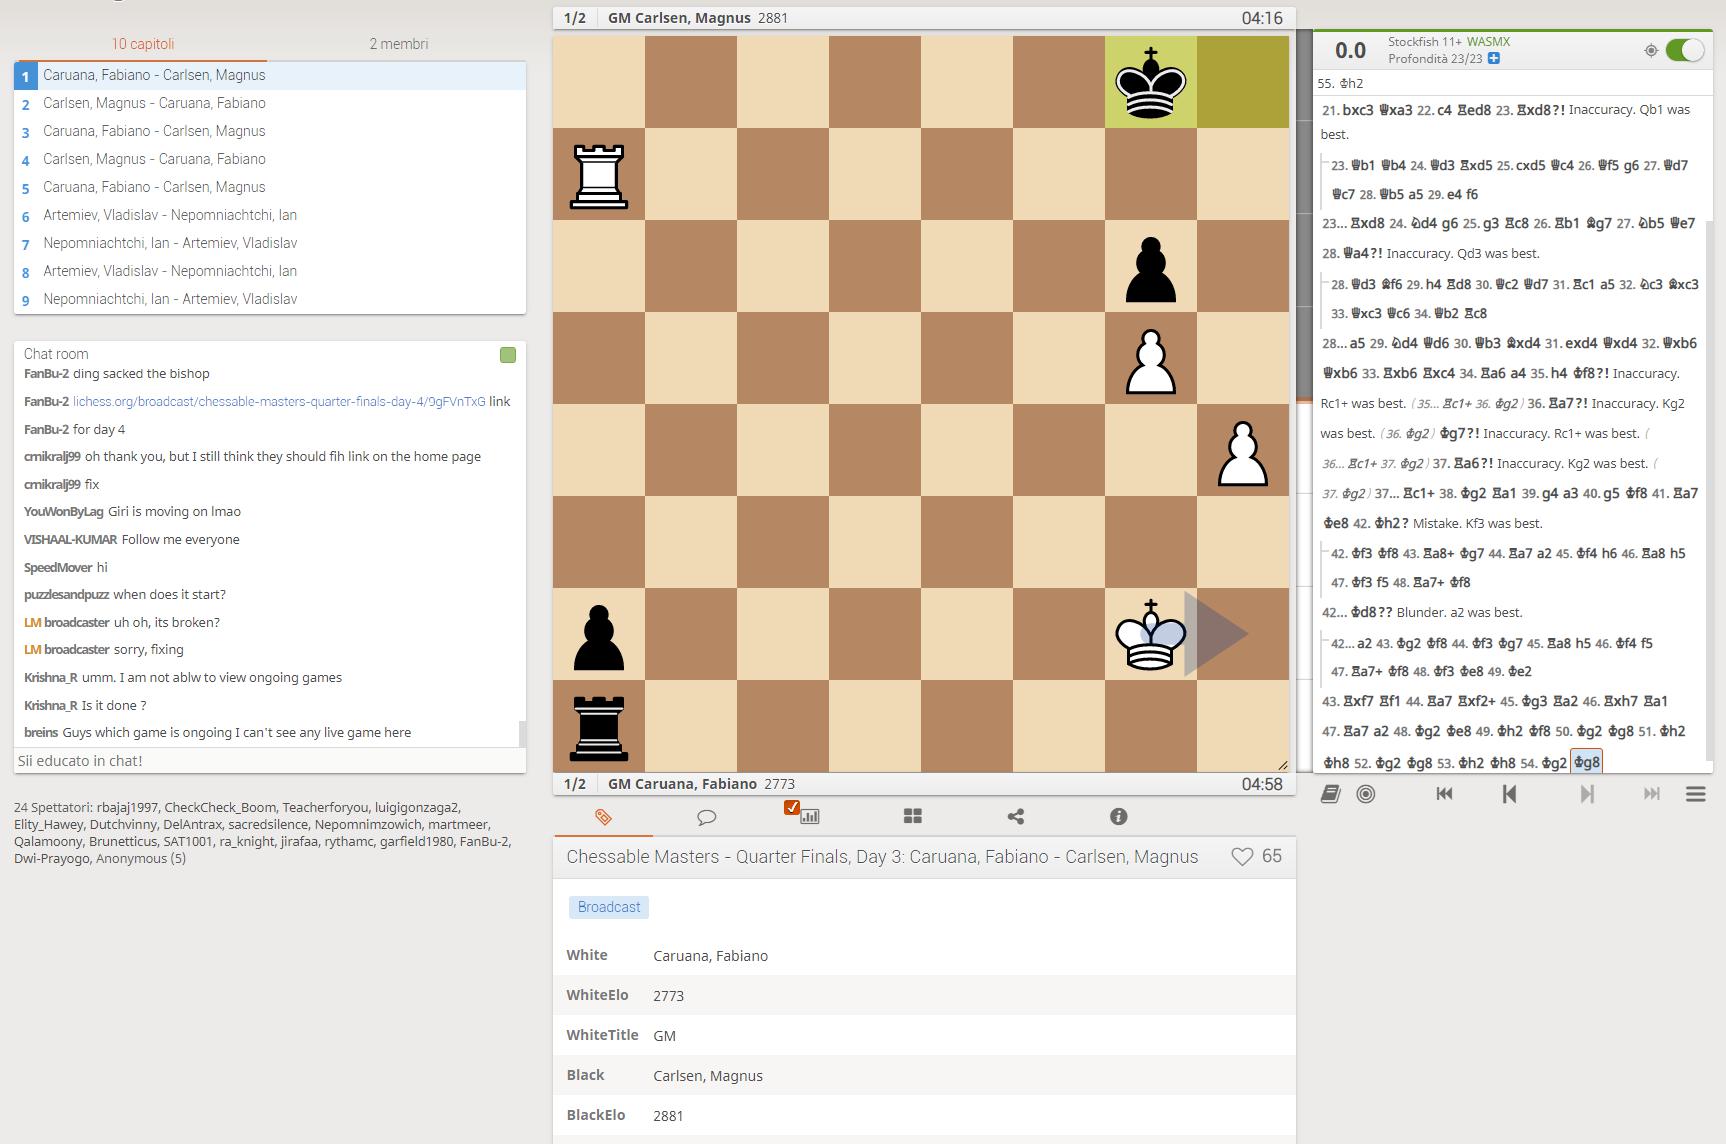 Photo of Chessable Masters - Quarter Finals, Day 3: <b>Caruana</b>, Fabiano